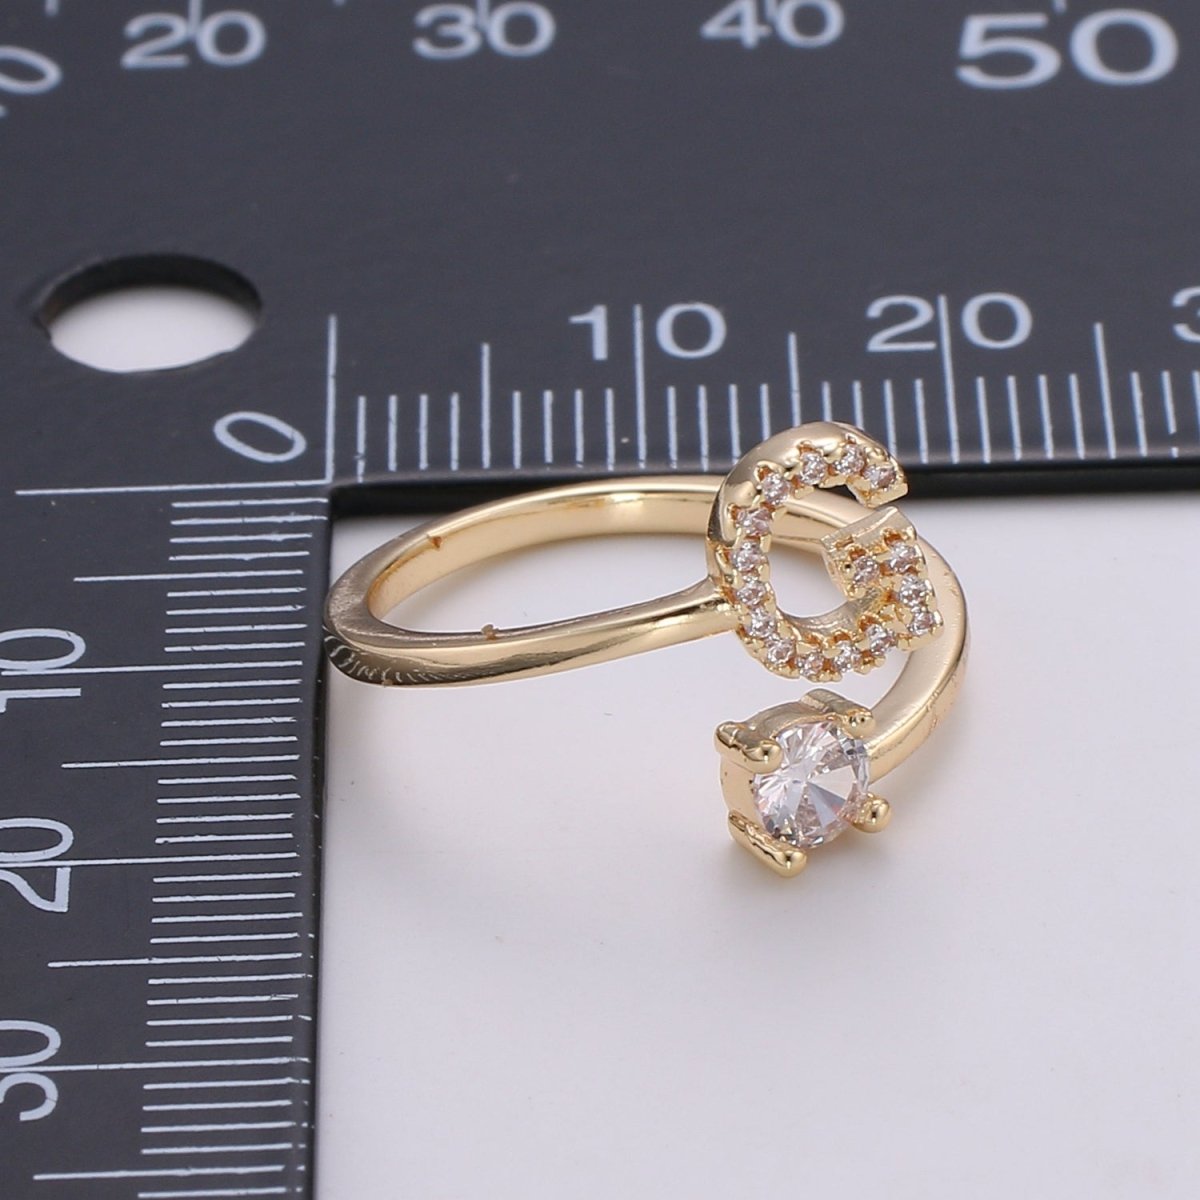 Letter Ring - Elisa Solomon Jewelry